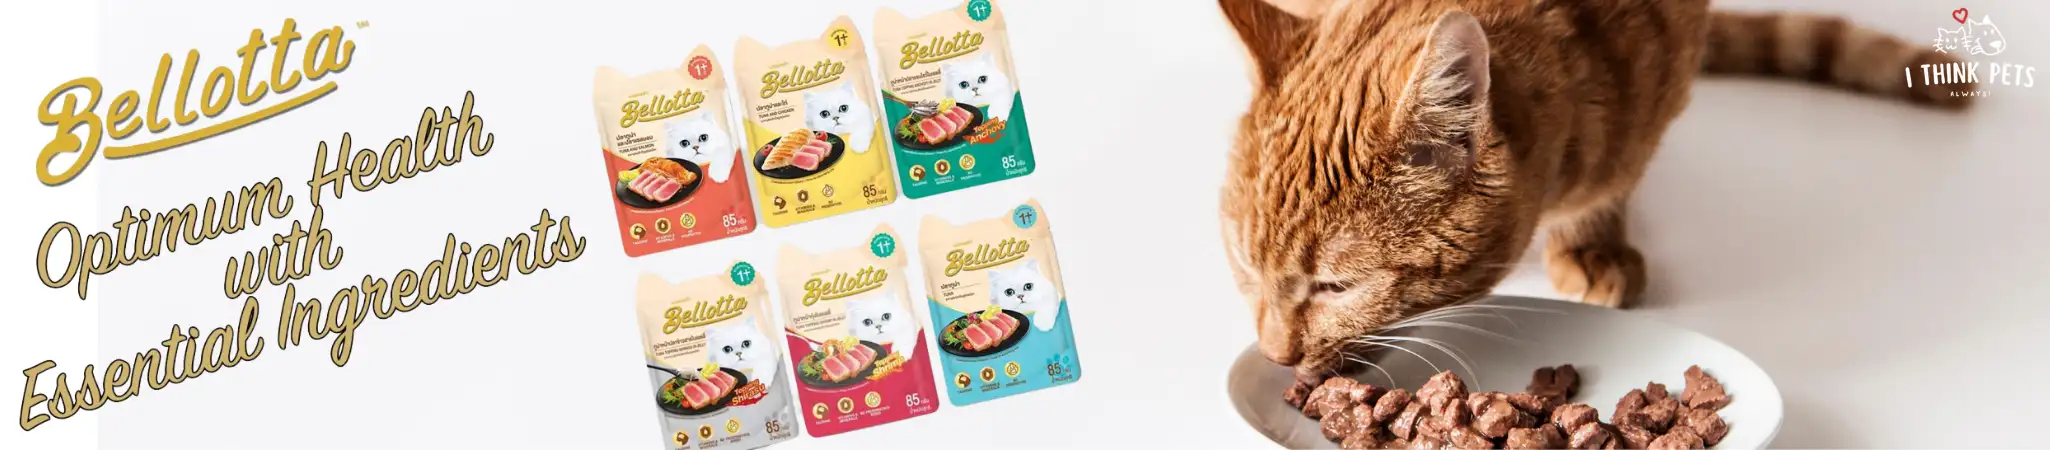 Bellotta Cat Food at ithinkpets.com